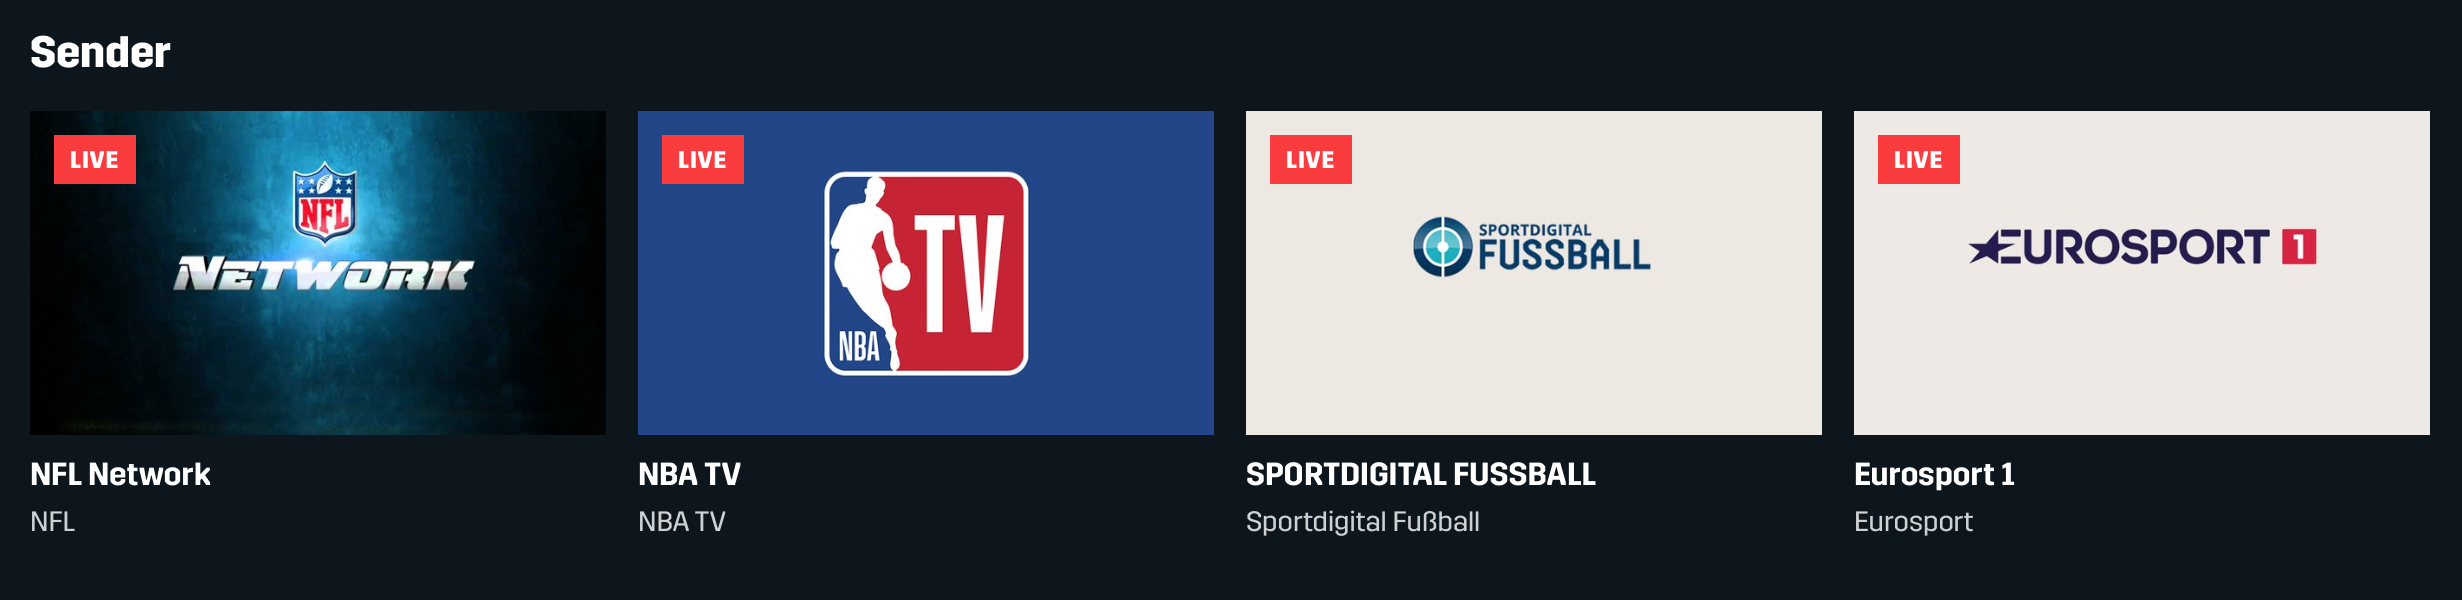 TV Kanäle Sportdigital Fußball NFL Network NBA TV Eurosport 1